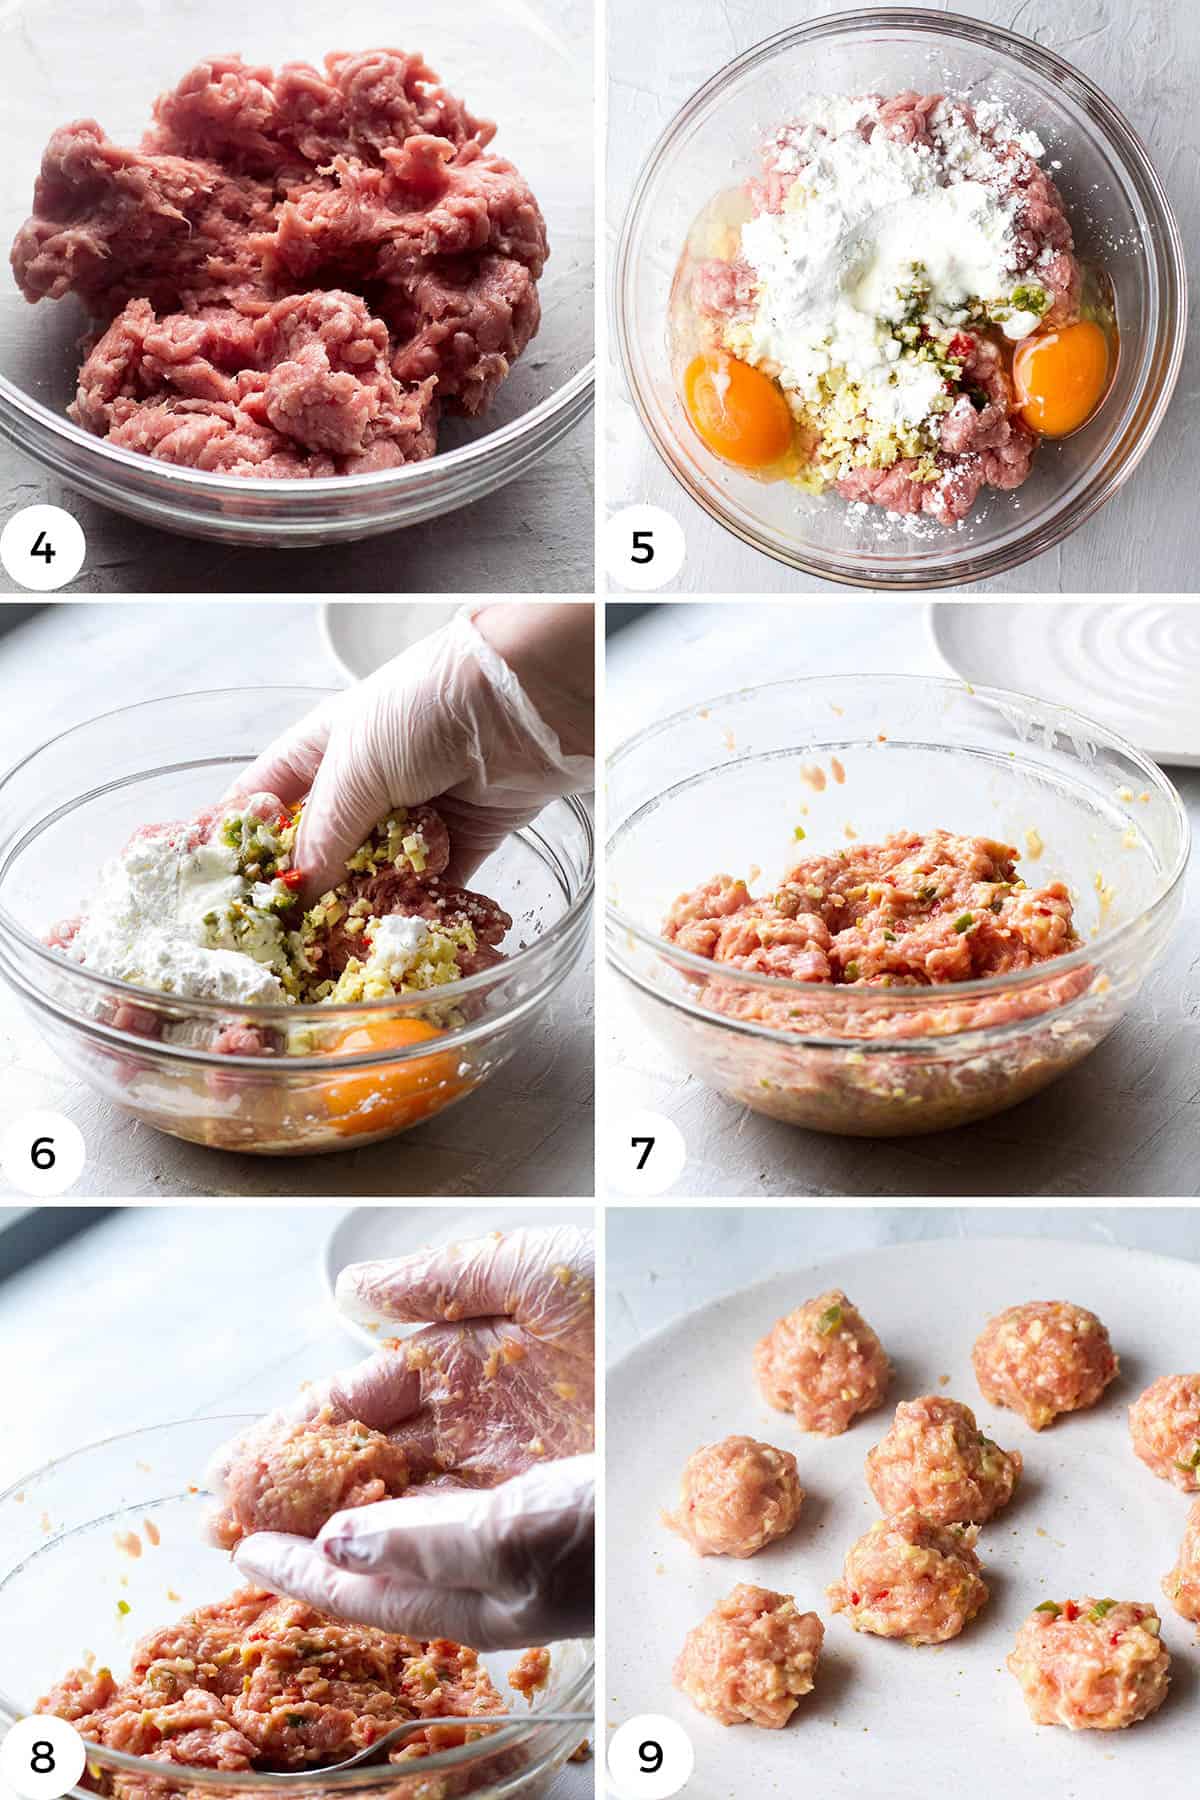 Steps on how to shape the meatballs.